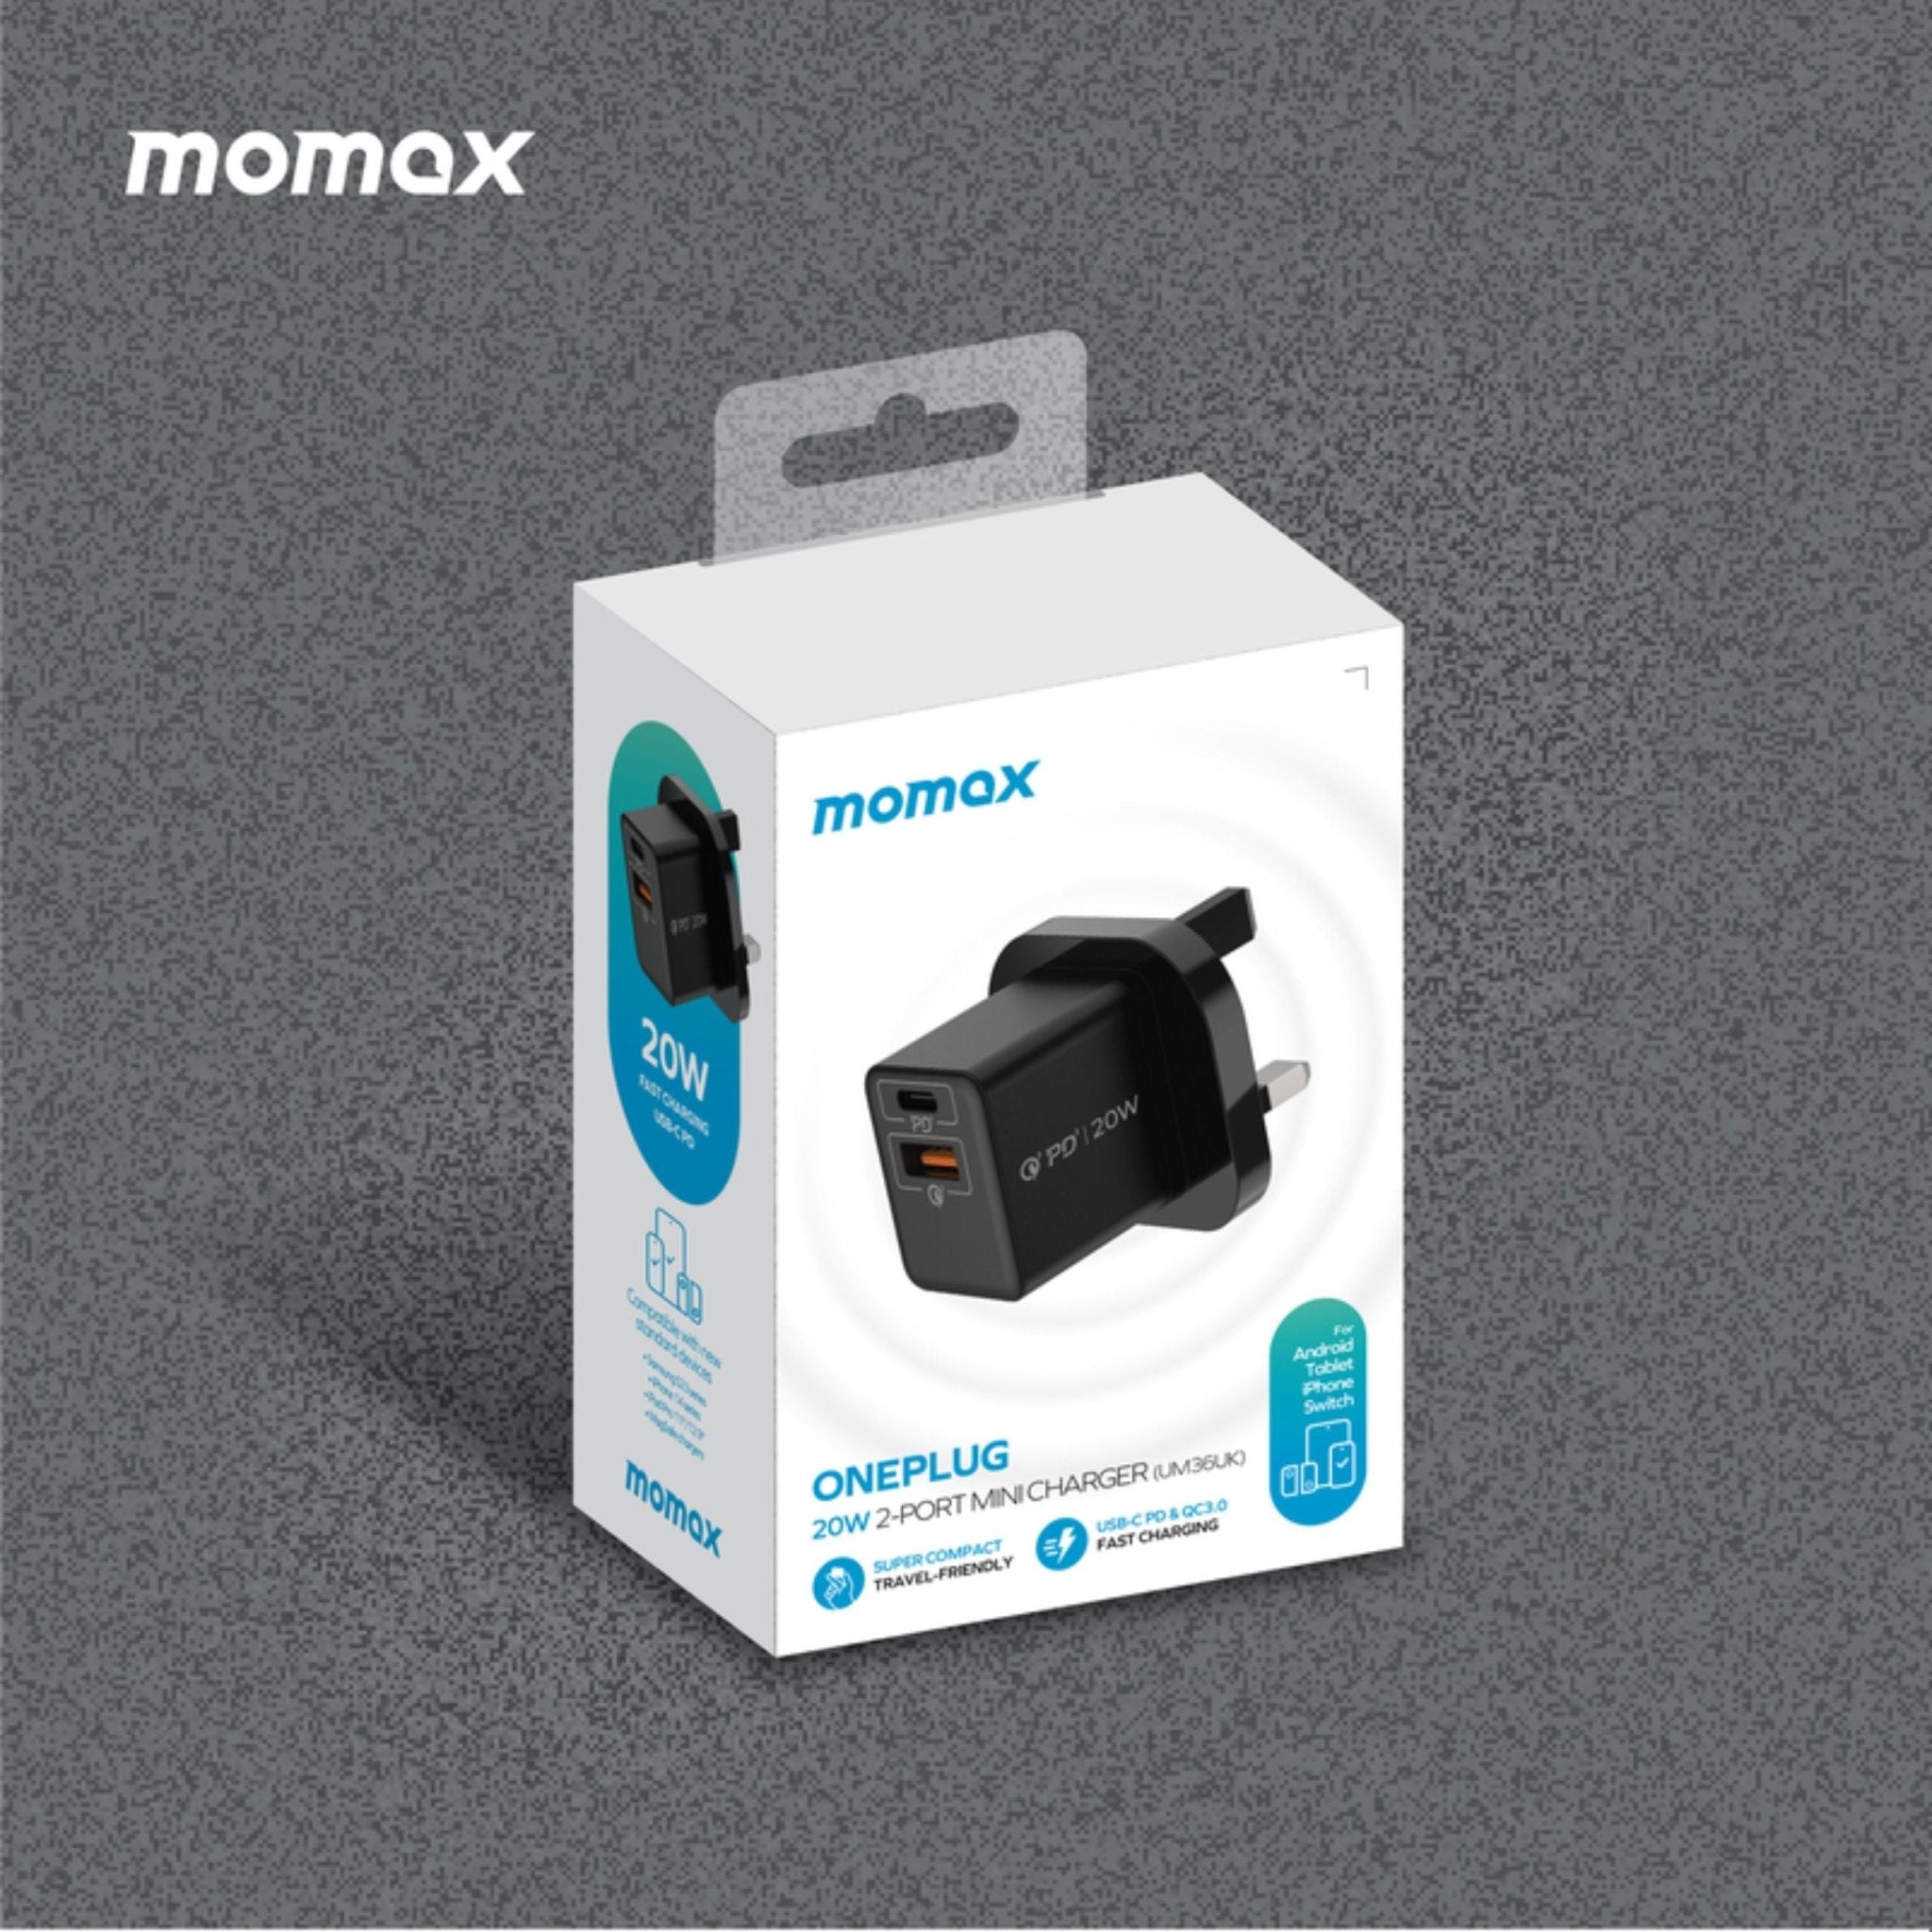 Momax Oneplug 20w 2 Port Mini Wall Charger - Black